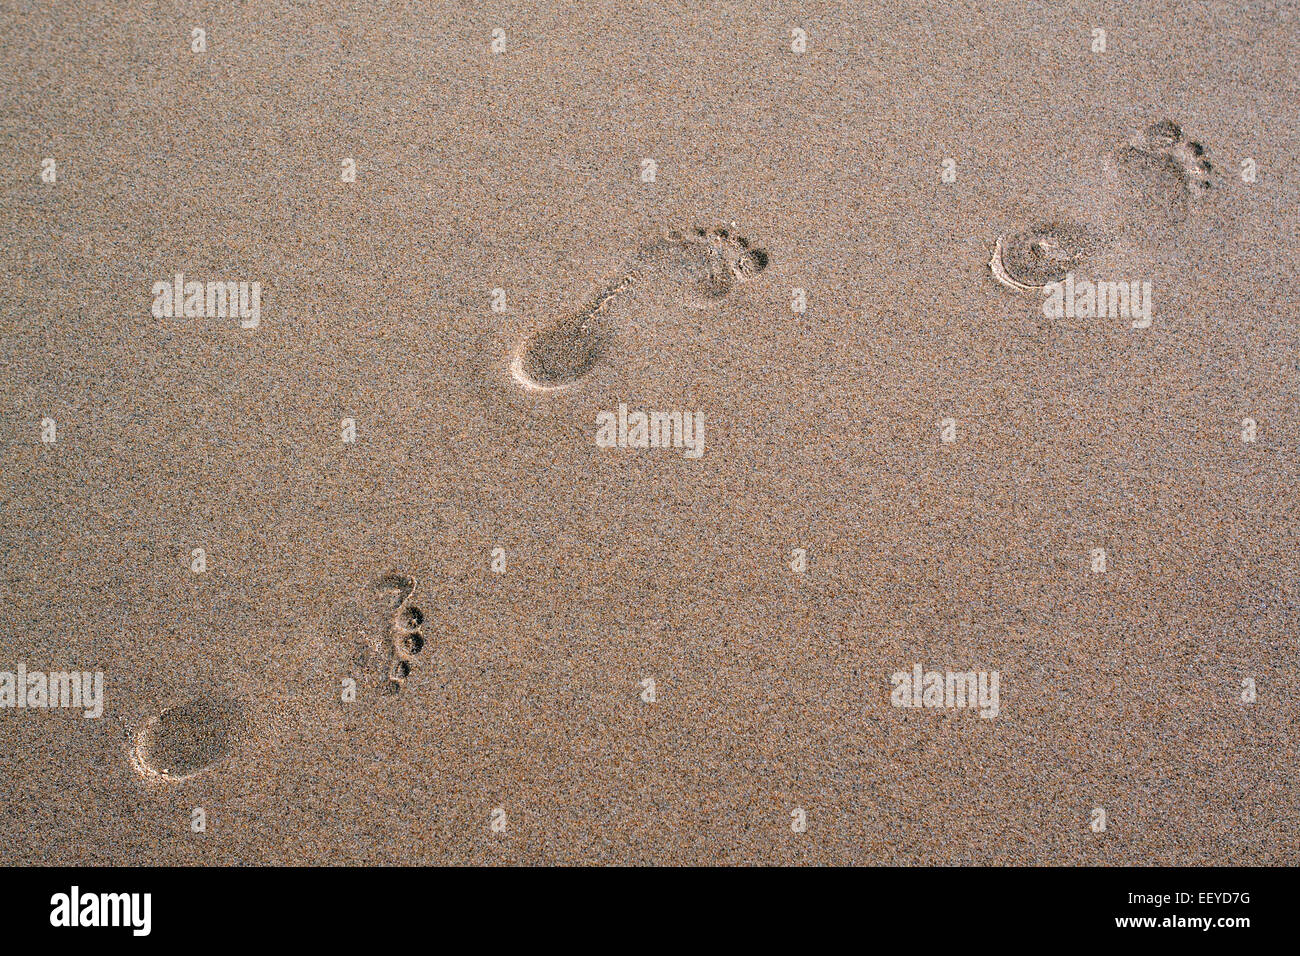 Footprints in sand Banque D'Images